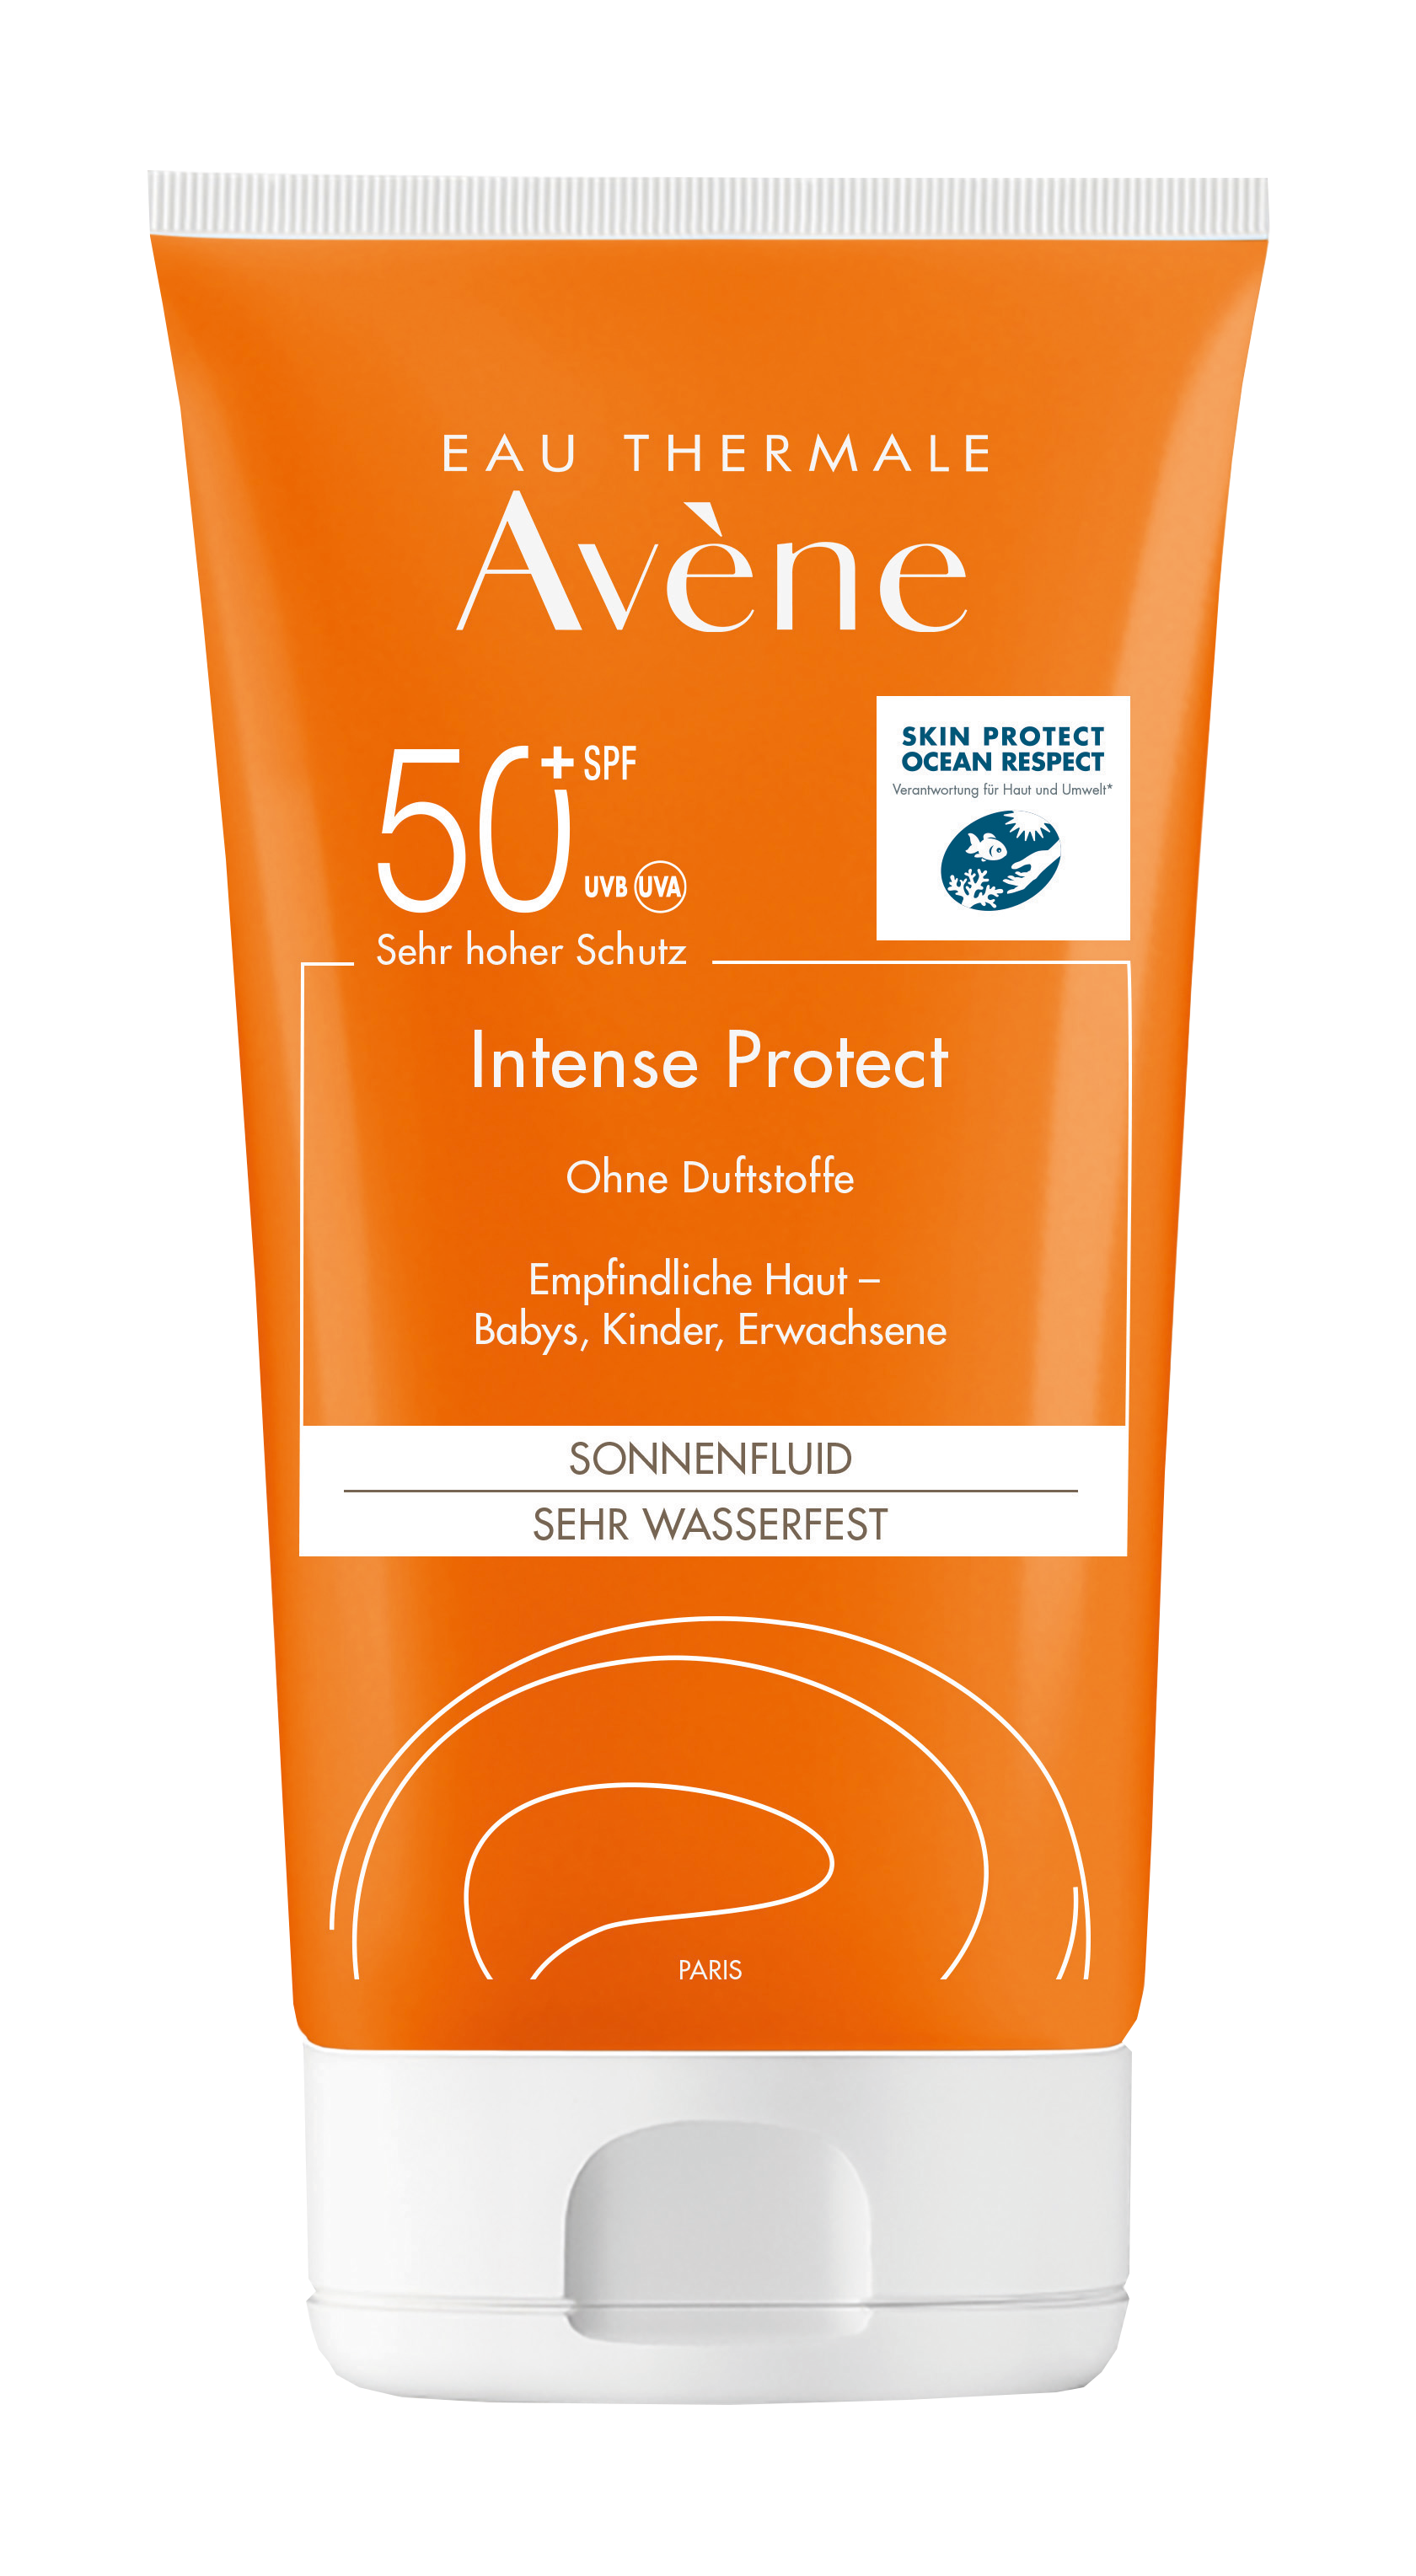 Eau Thermale Avène – Intense Protect SPF 50+